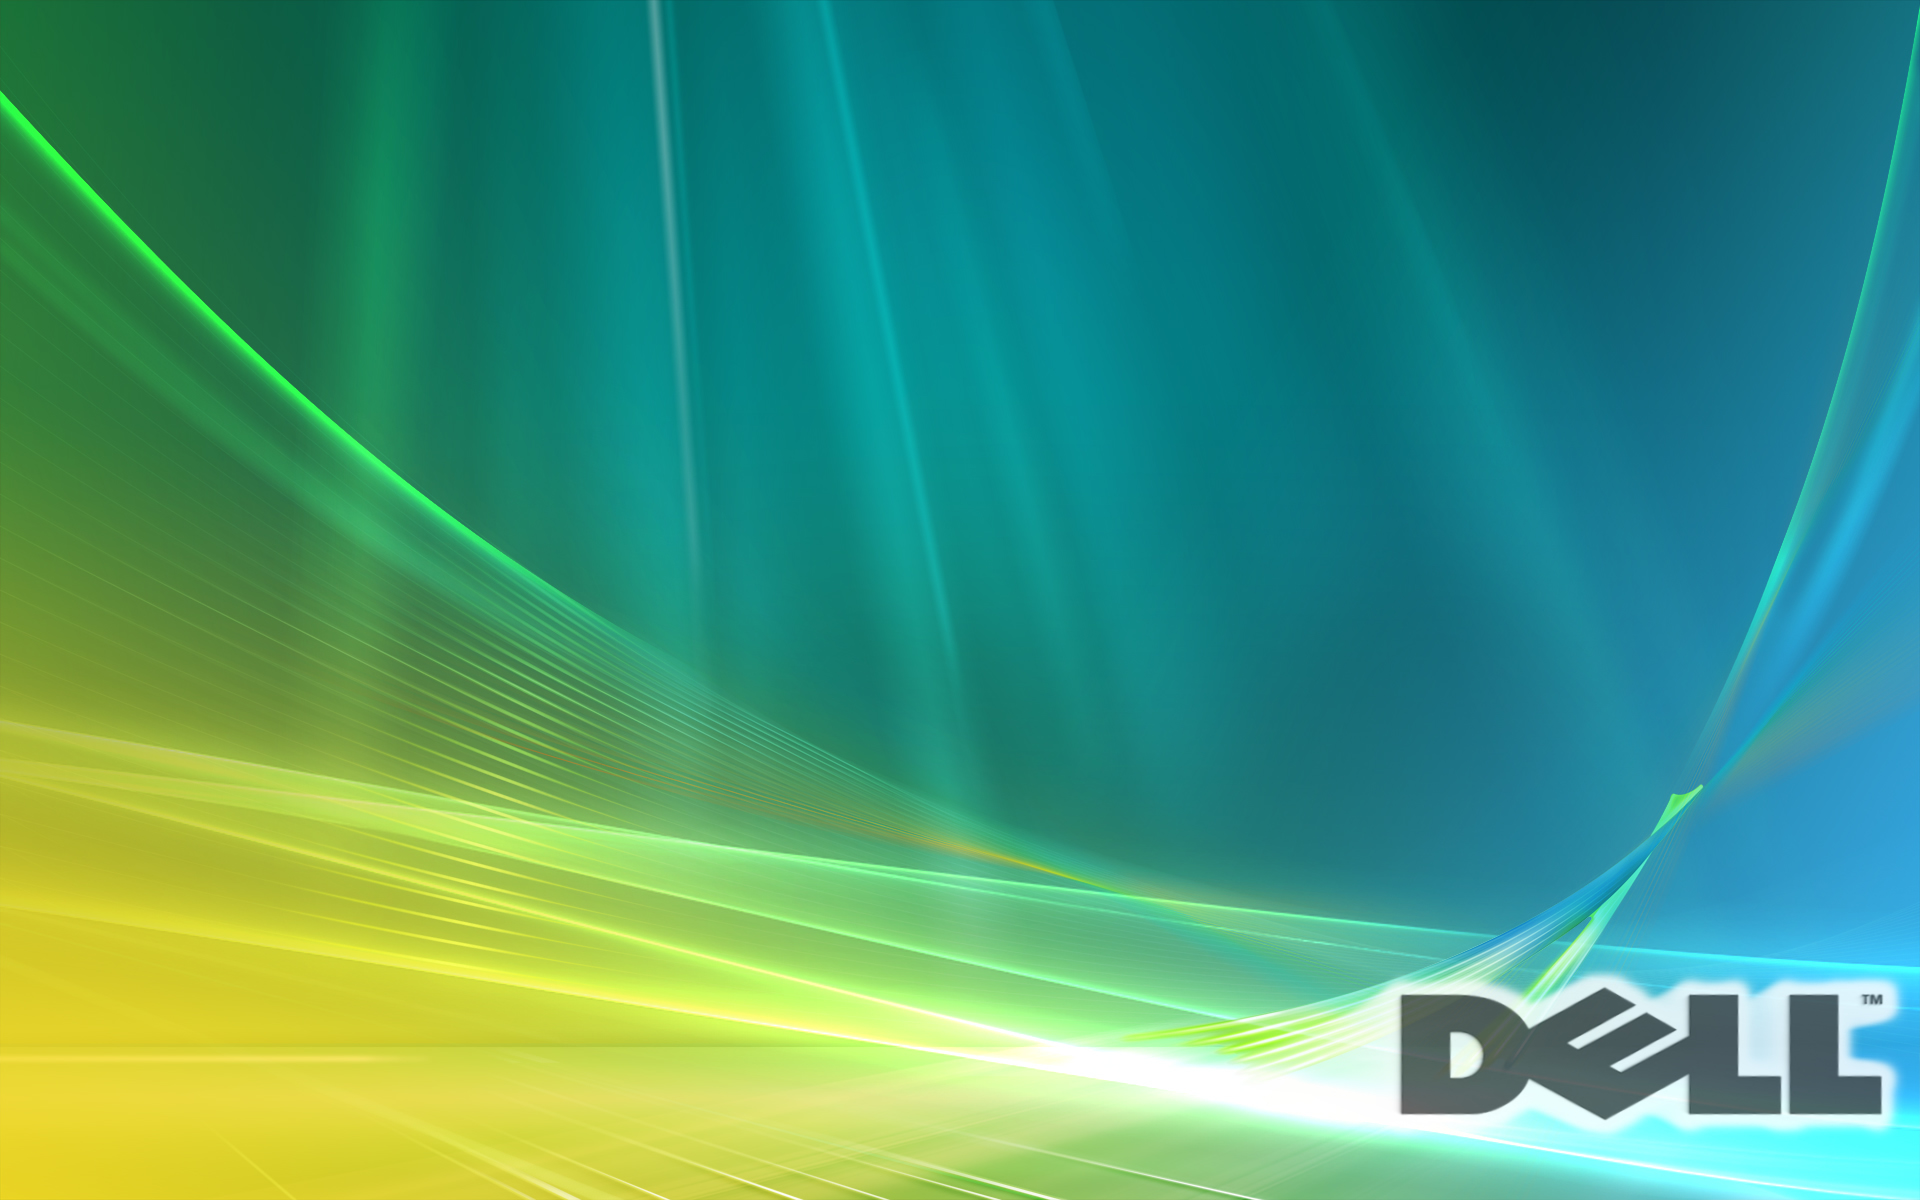 Dell Backgrounds Free Download | PixelsTalk.Net